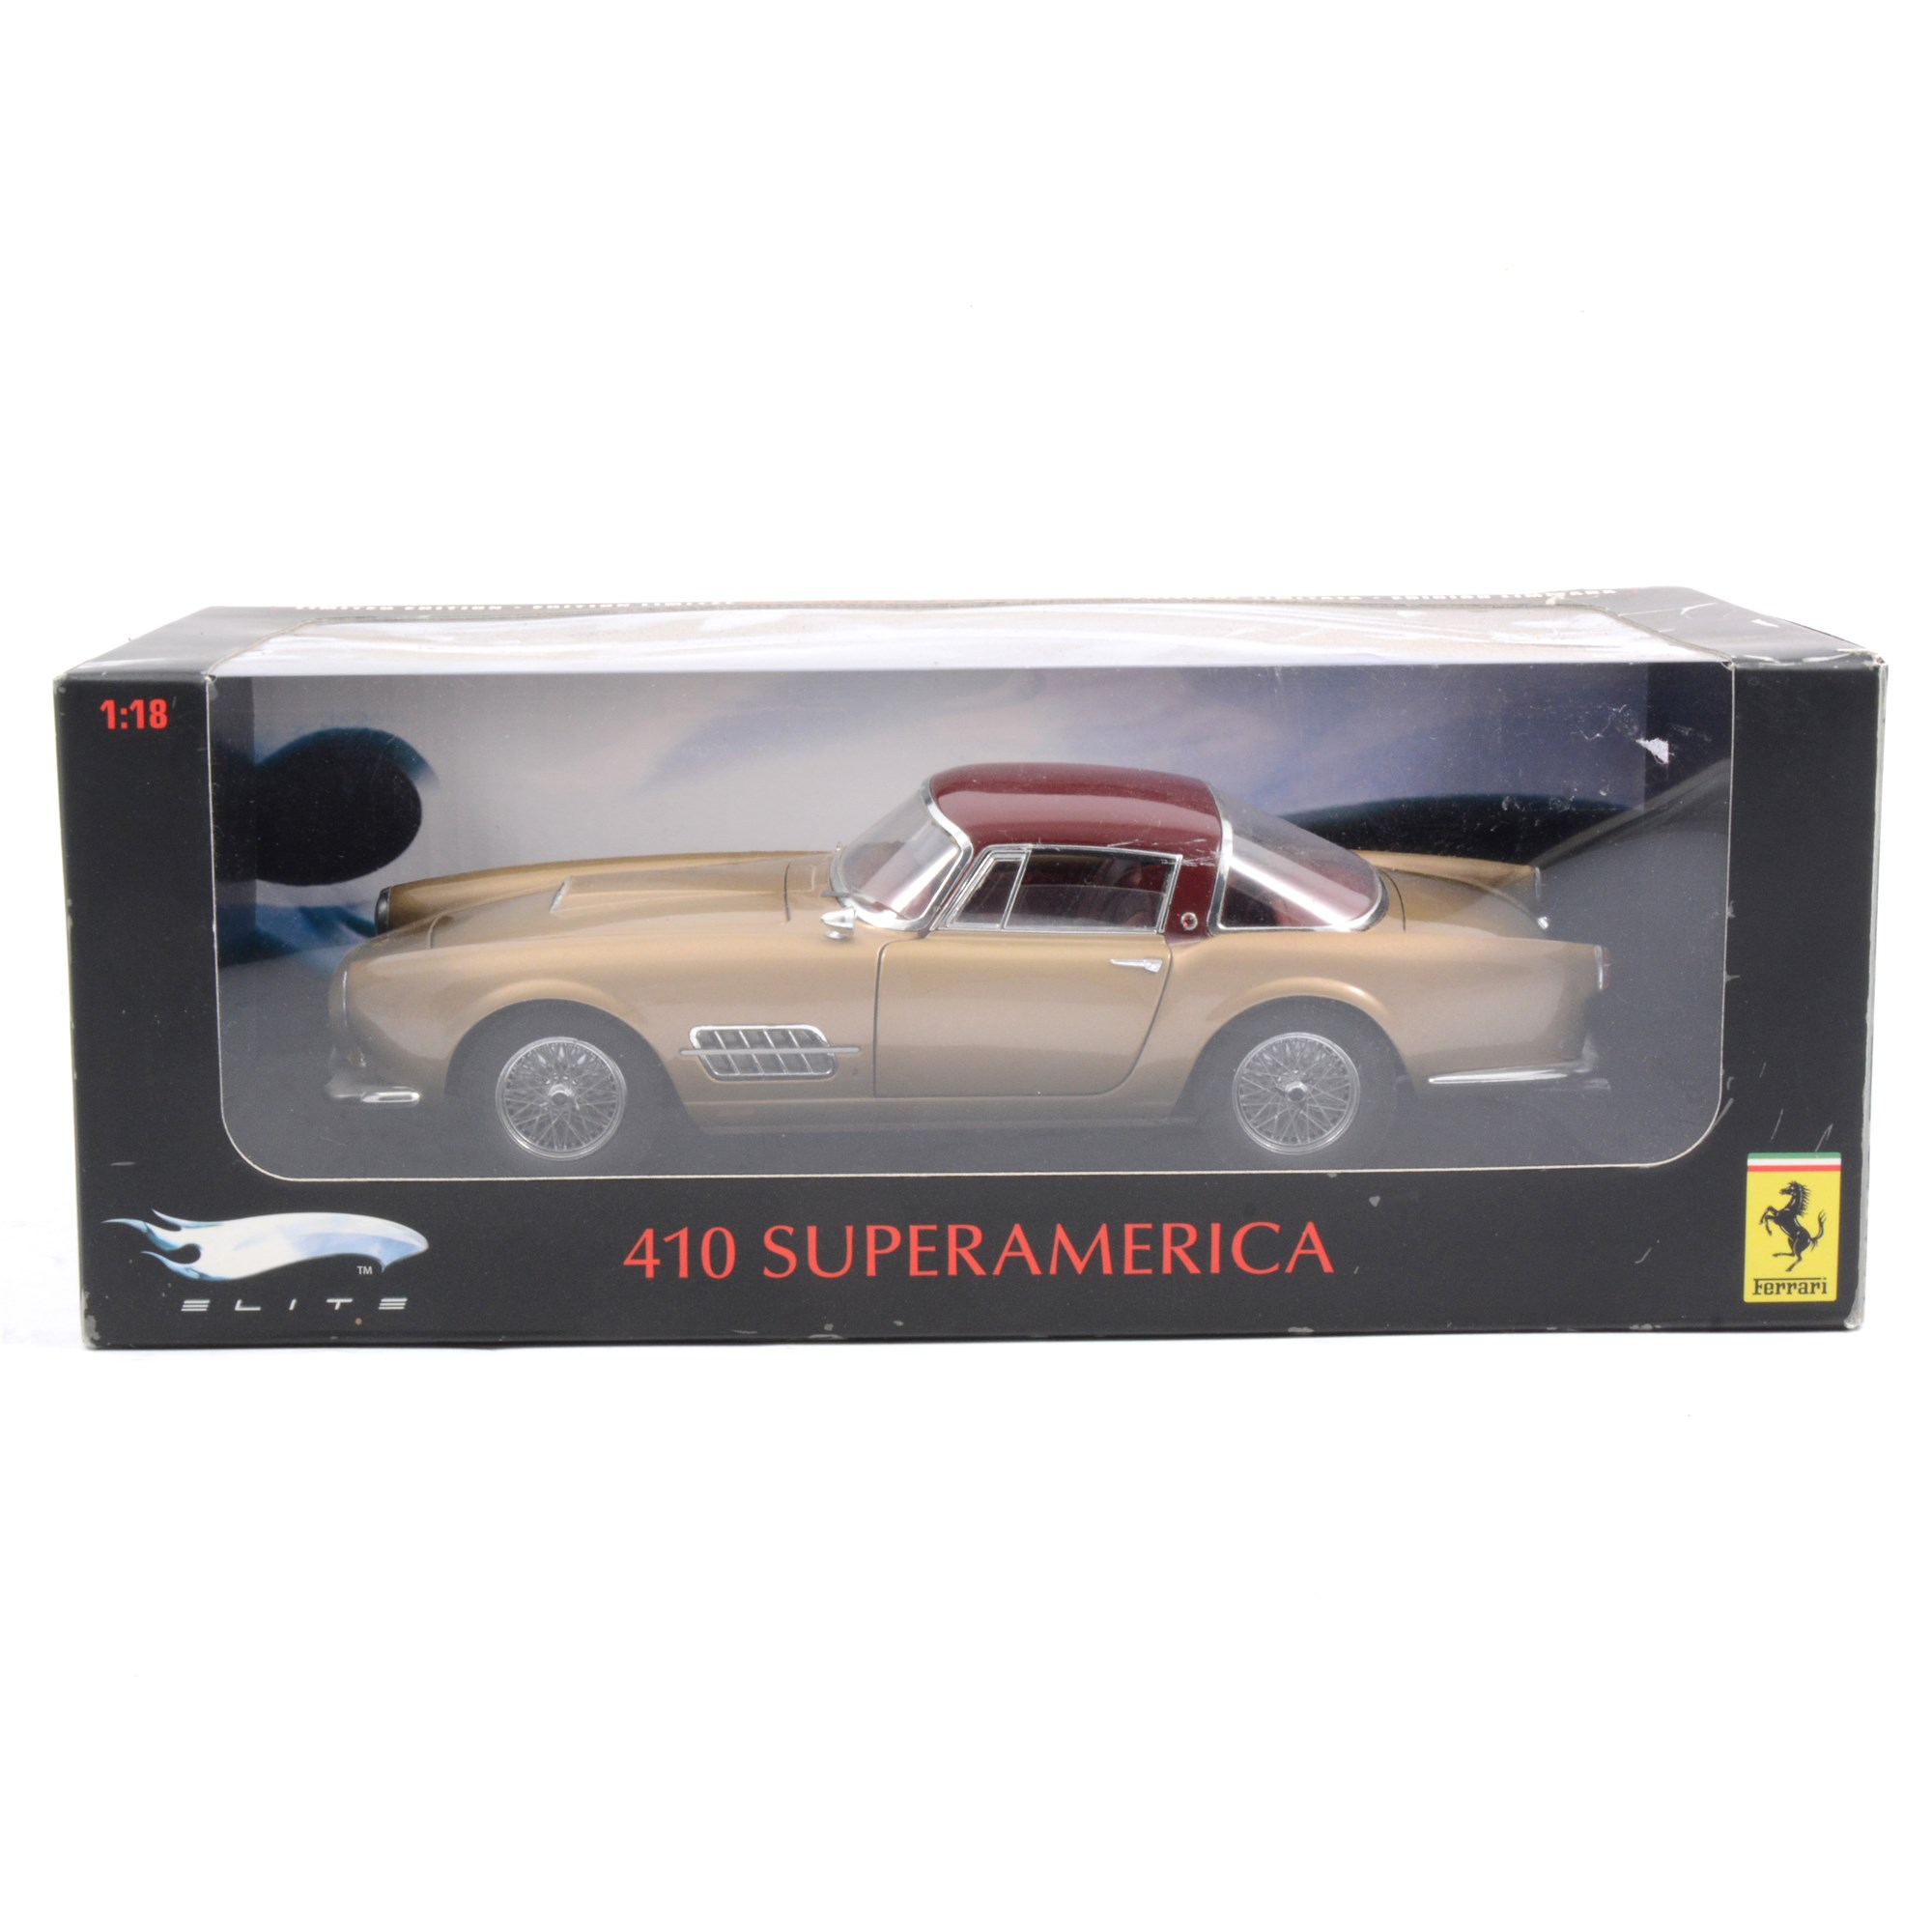 Lot 291 - Hotwheels Ferrari 410 Superamerica, 1:18